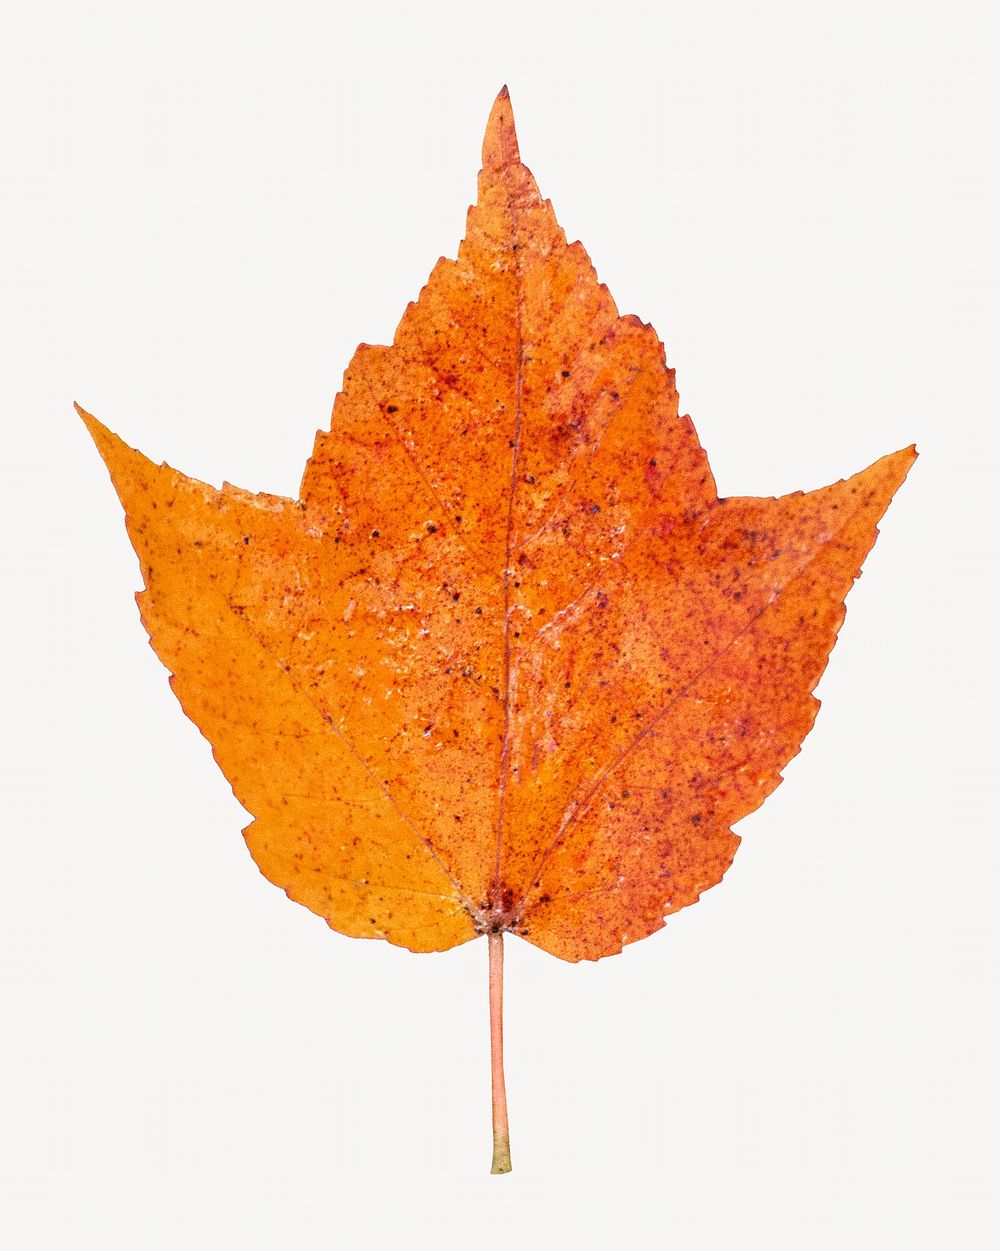 Autumn leaf collage element